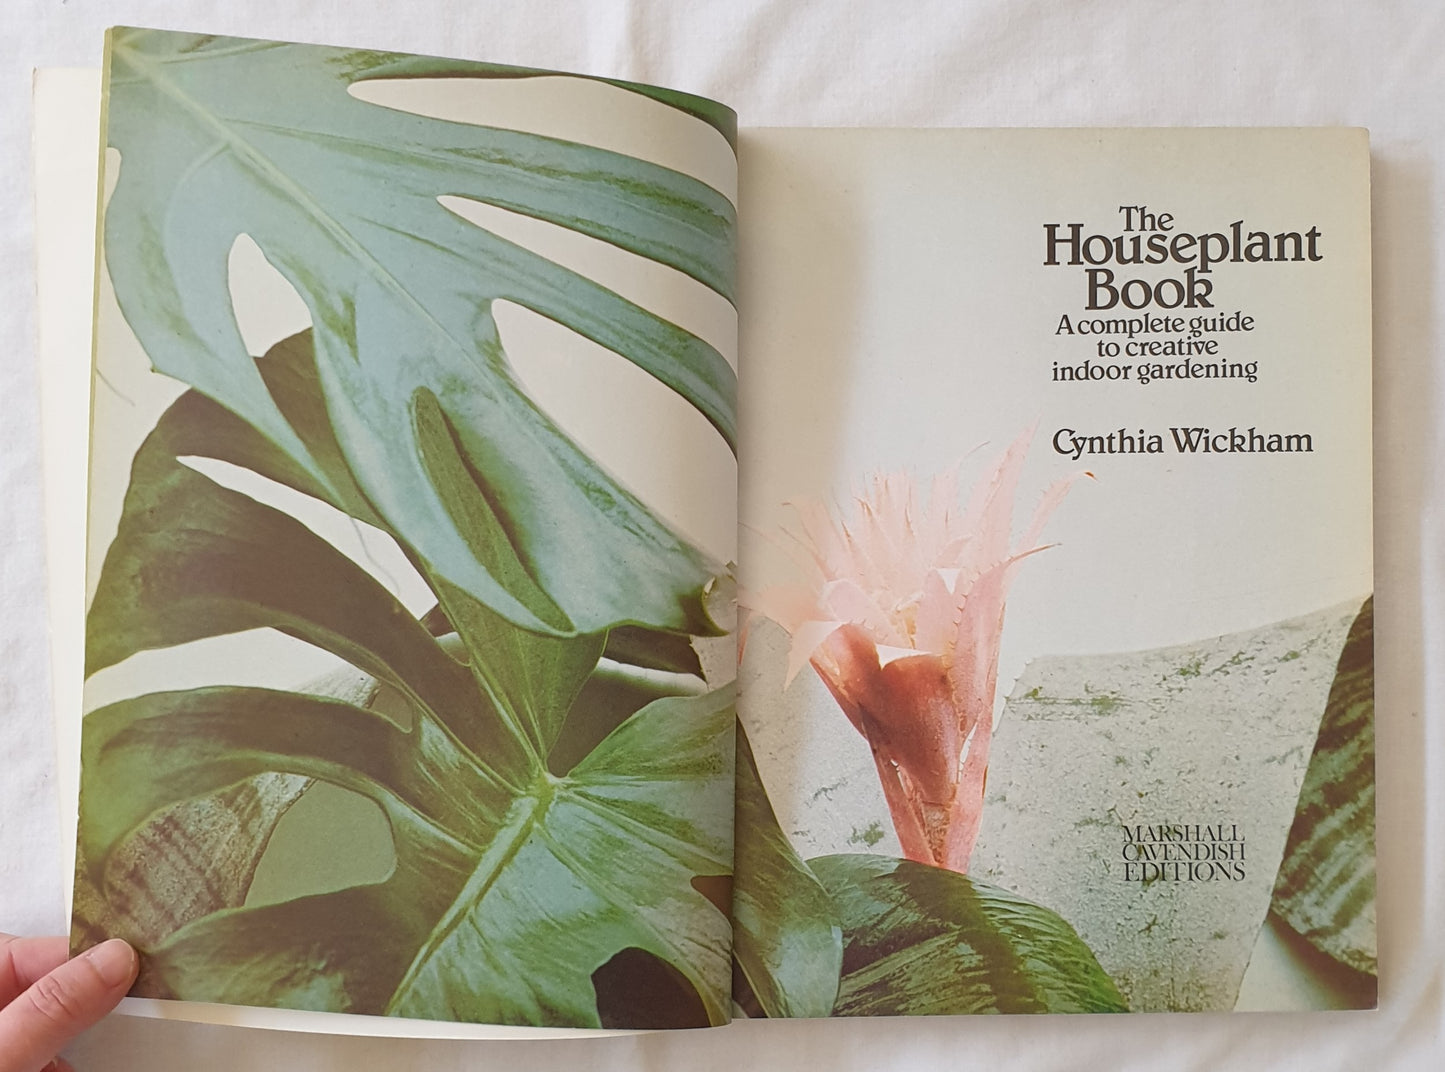 The Houseplant Book by Cynthia Wickham